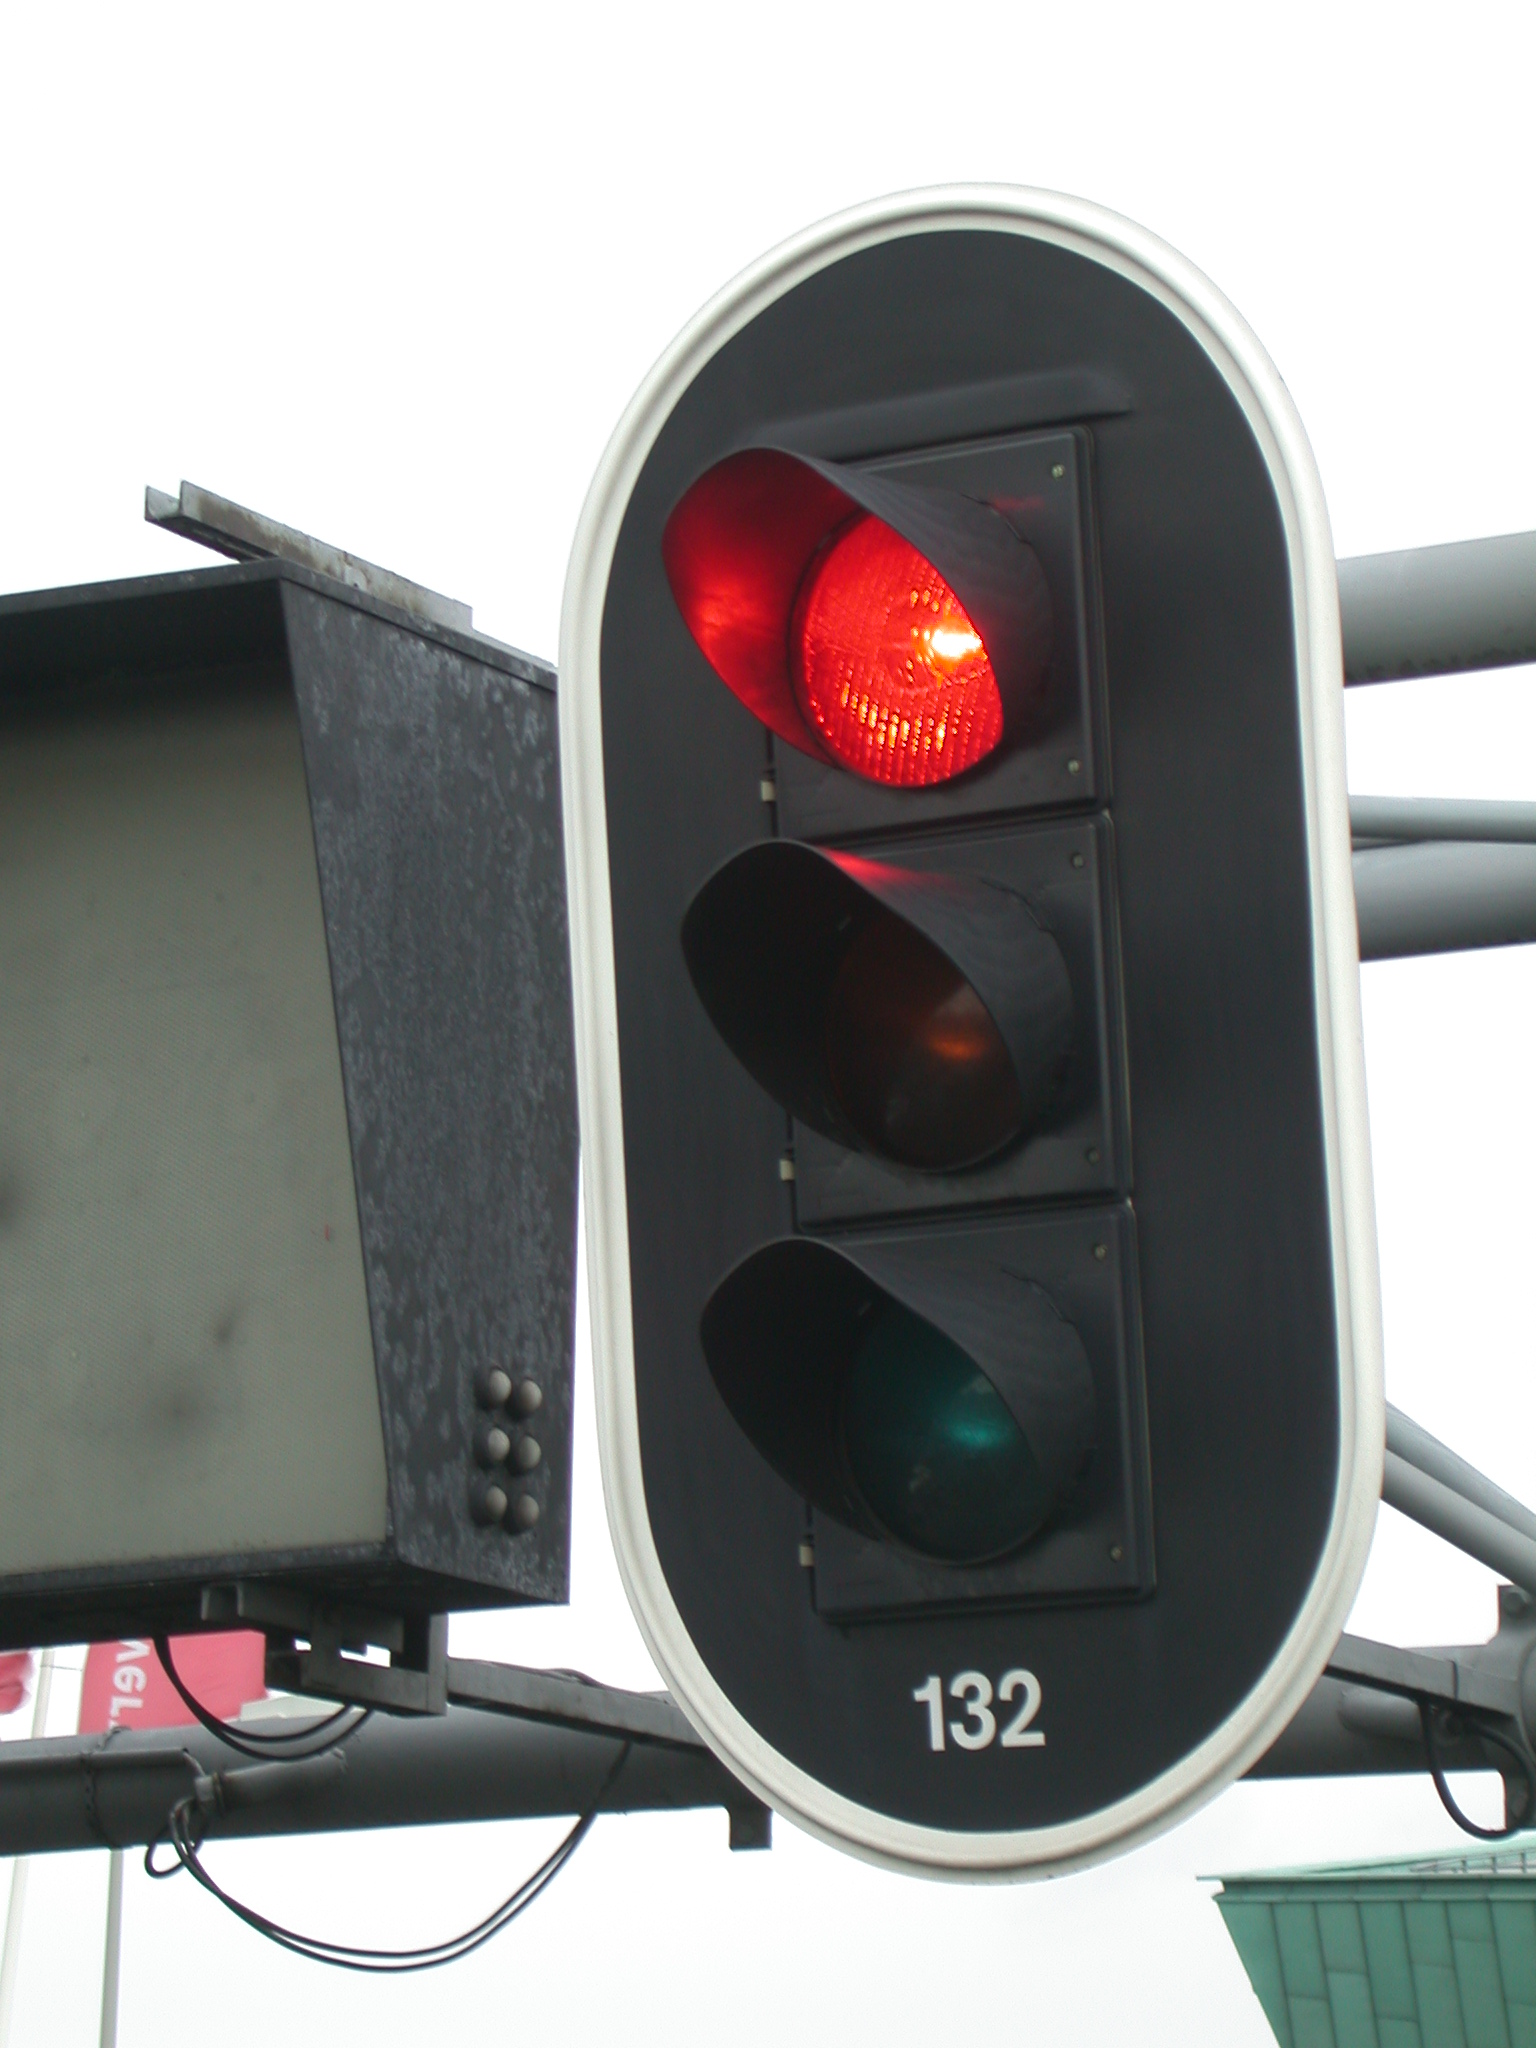 traffic light trafficlight lights red wait stop